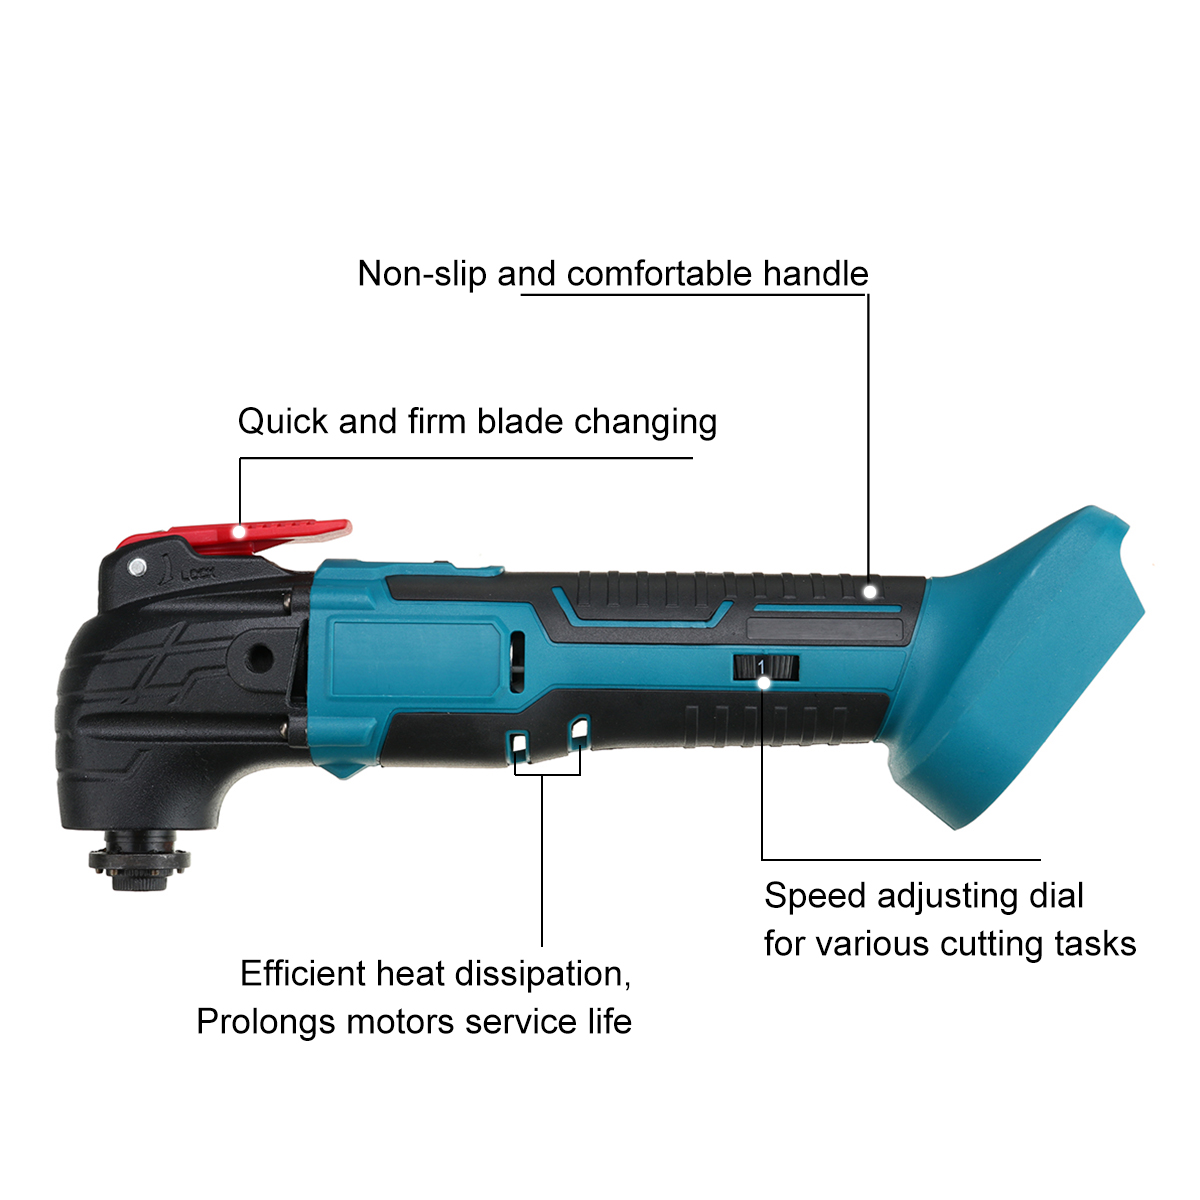 4° Cordless Oscillating Multi-tool 6 Speeds Power Tools for 18V Makita Battery